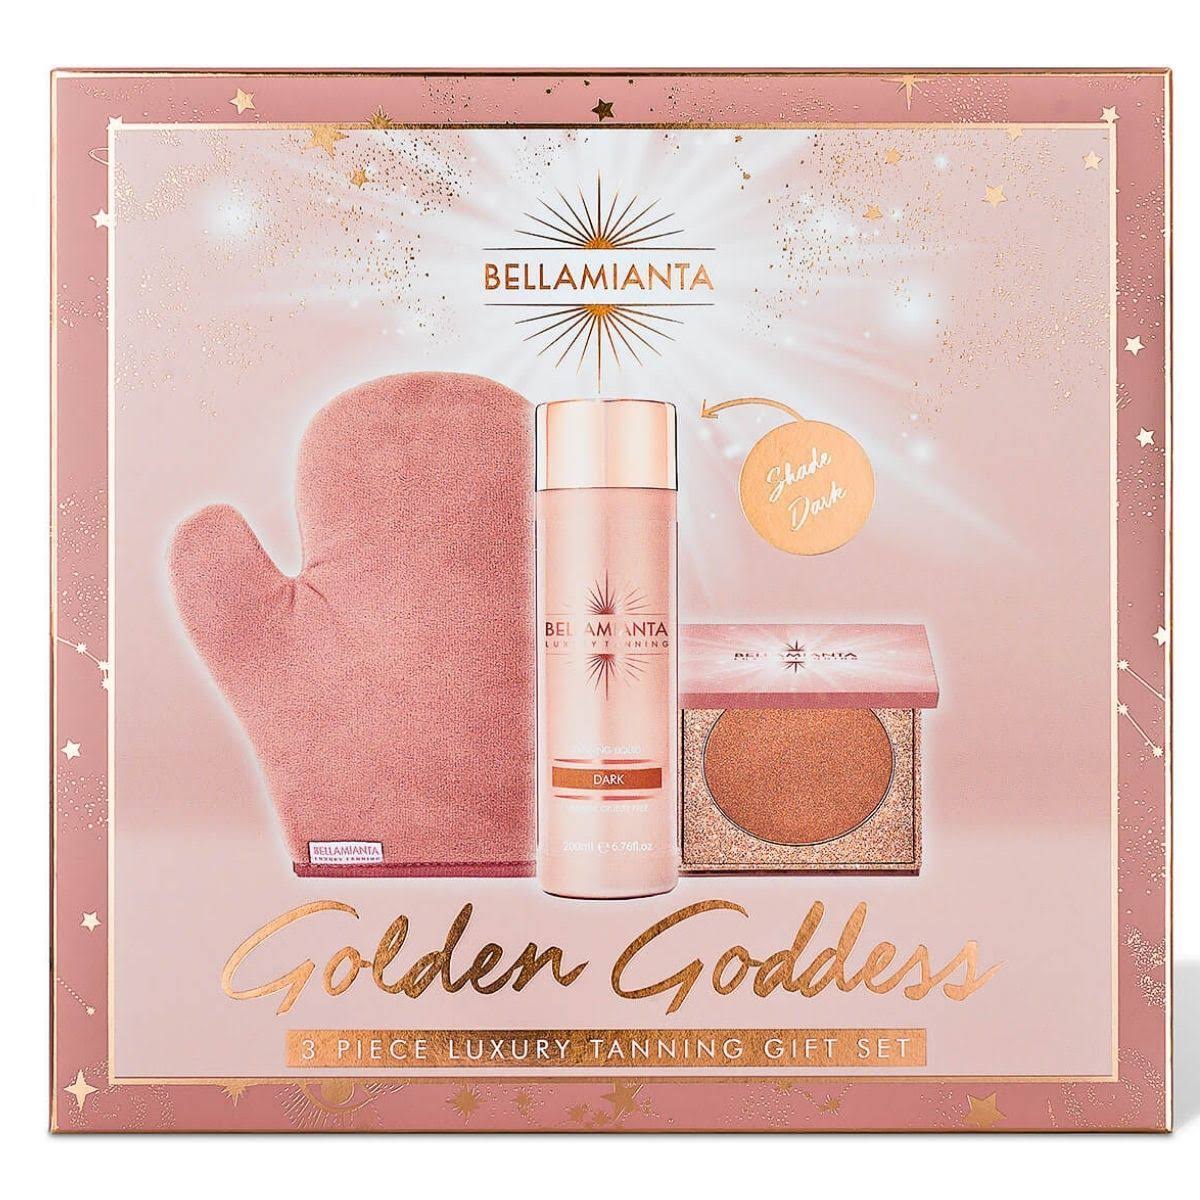 Bellamianta Golden Goddess Gift Set - Dark